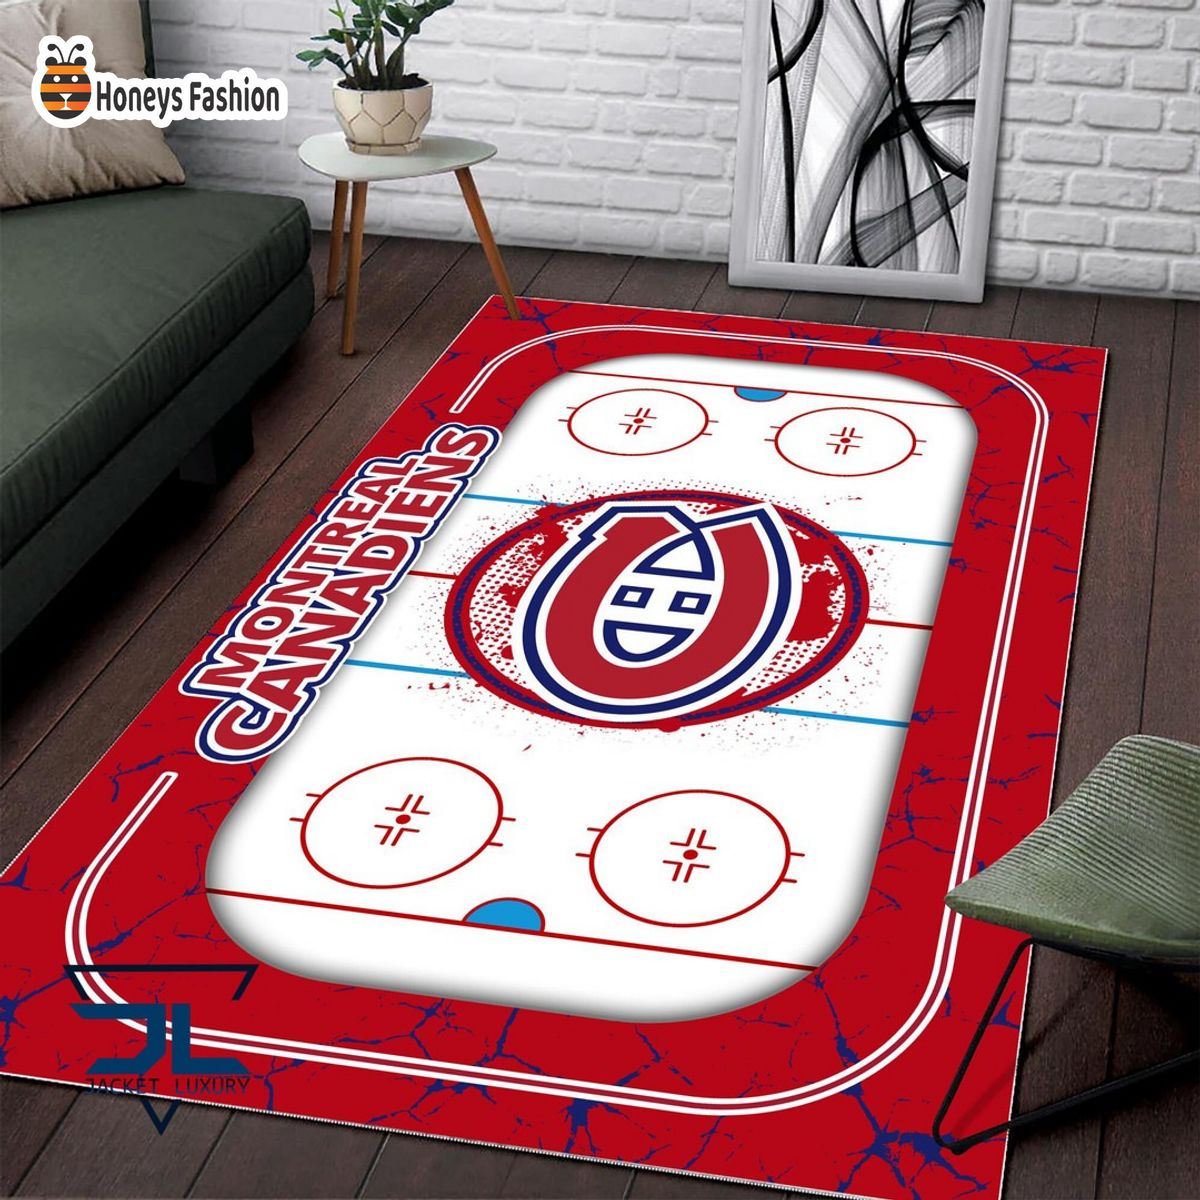 Montreal Canadiens NHL Rug Carpet